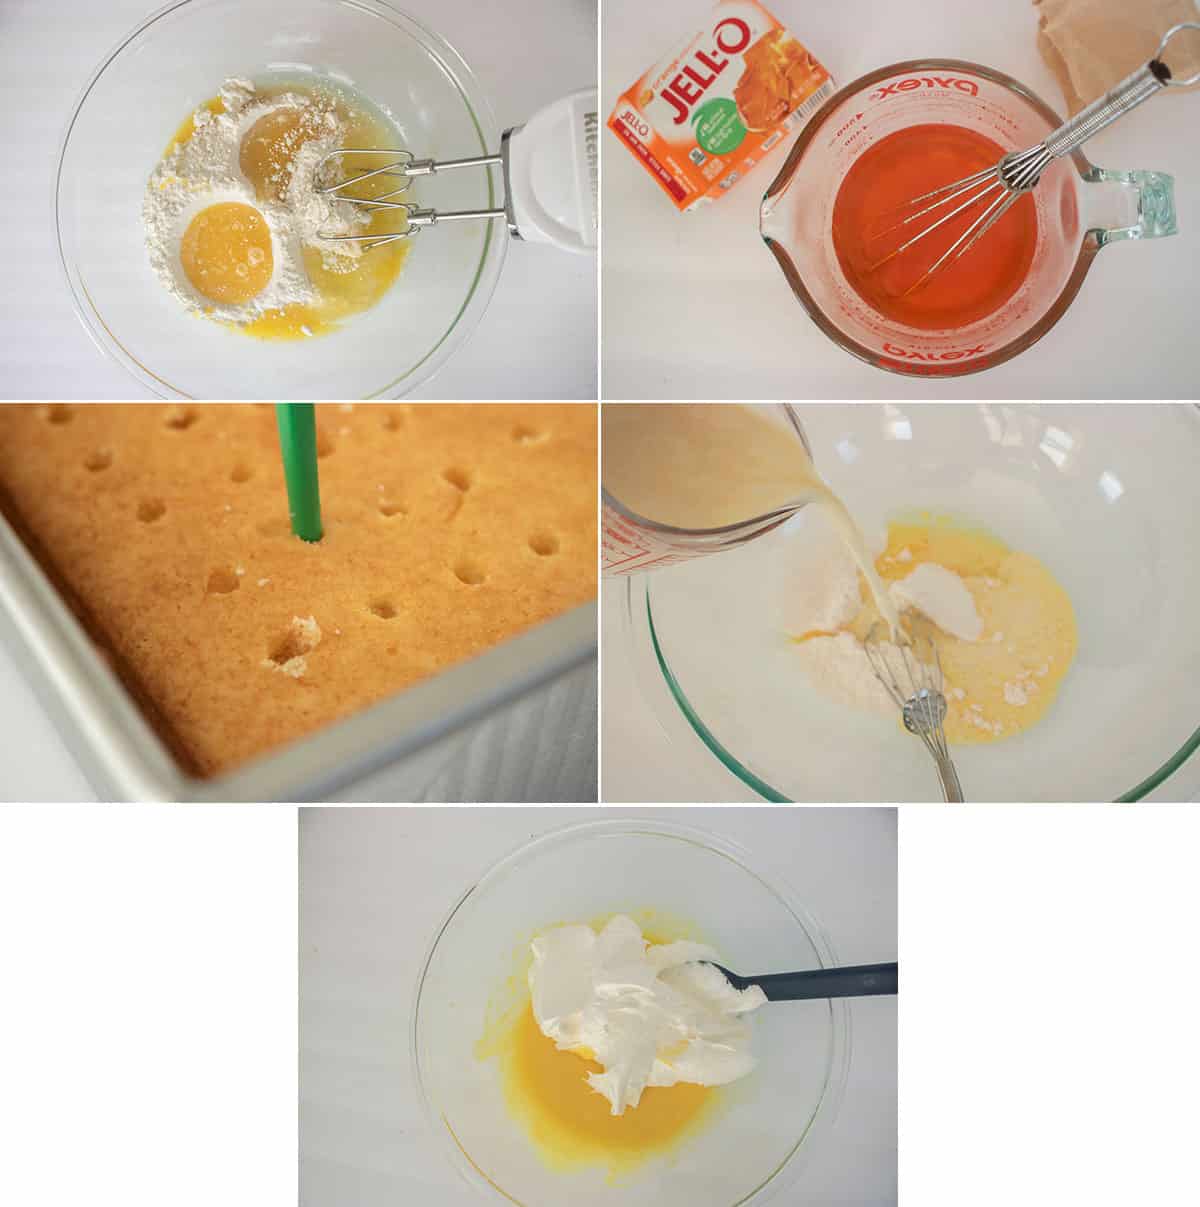 Showing how to make Orange Creamsicle Cake